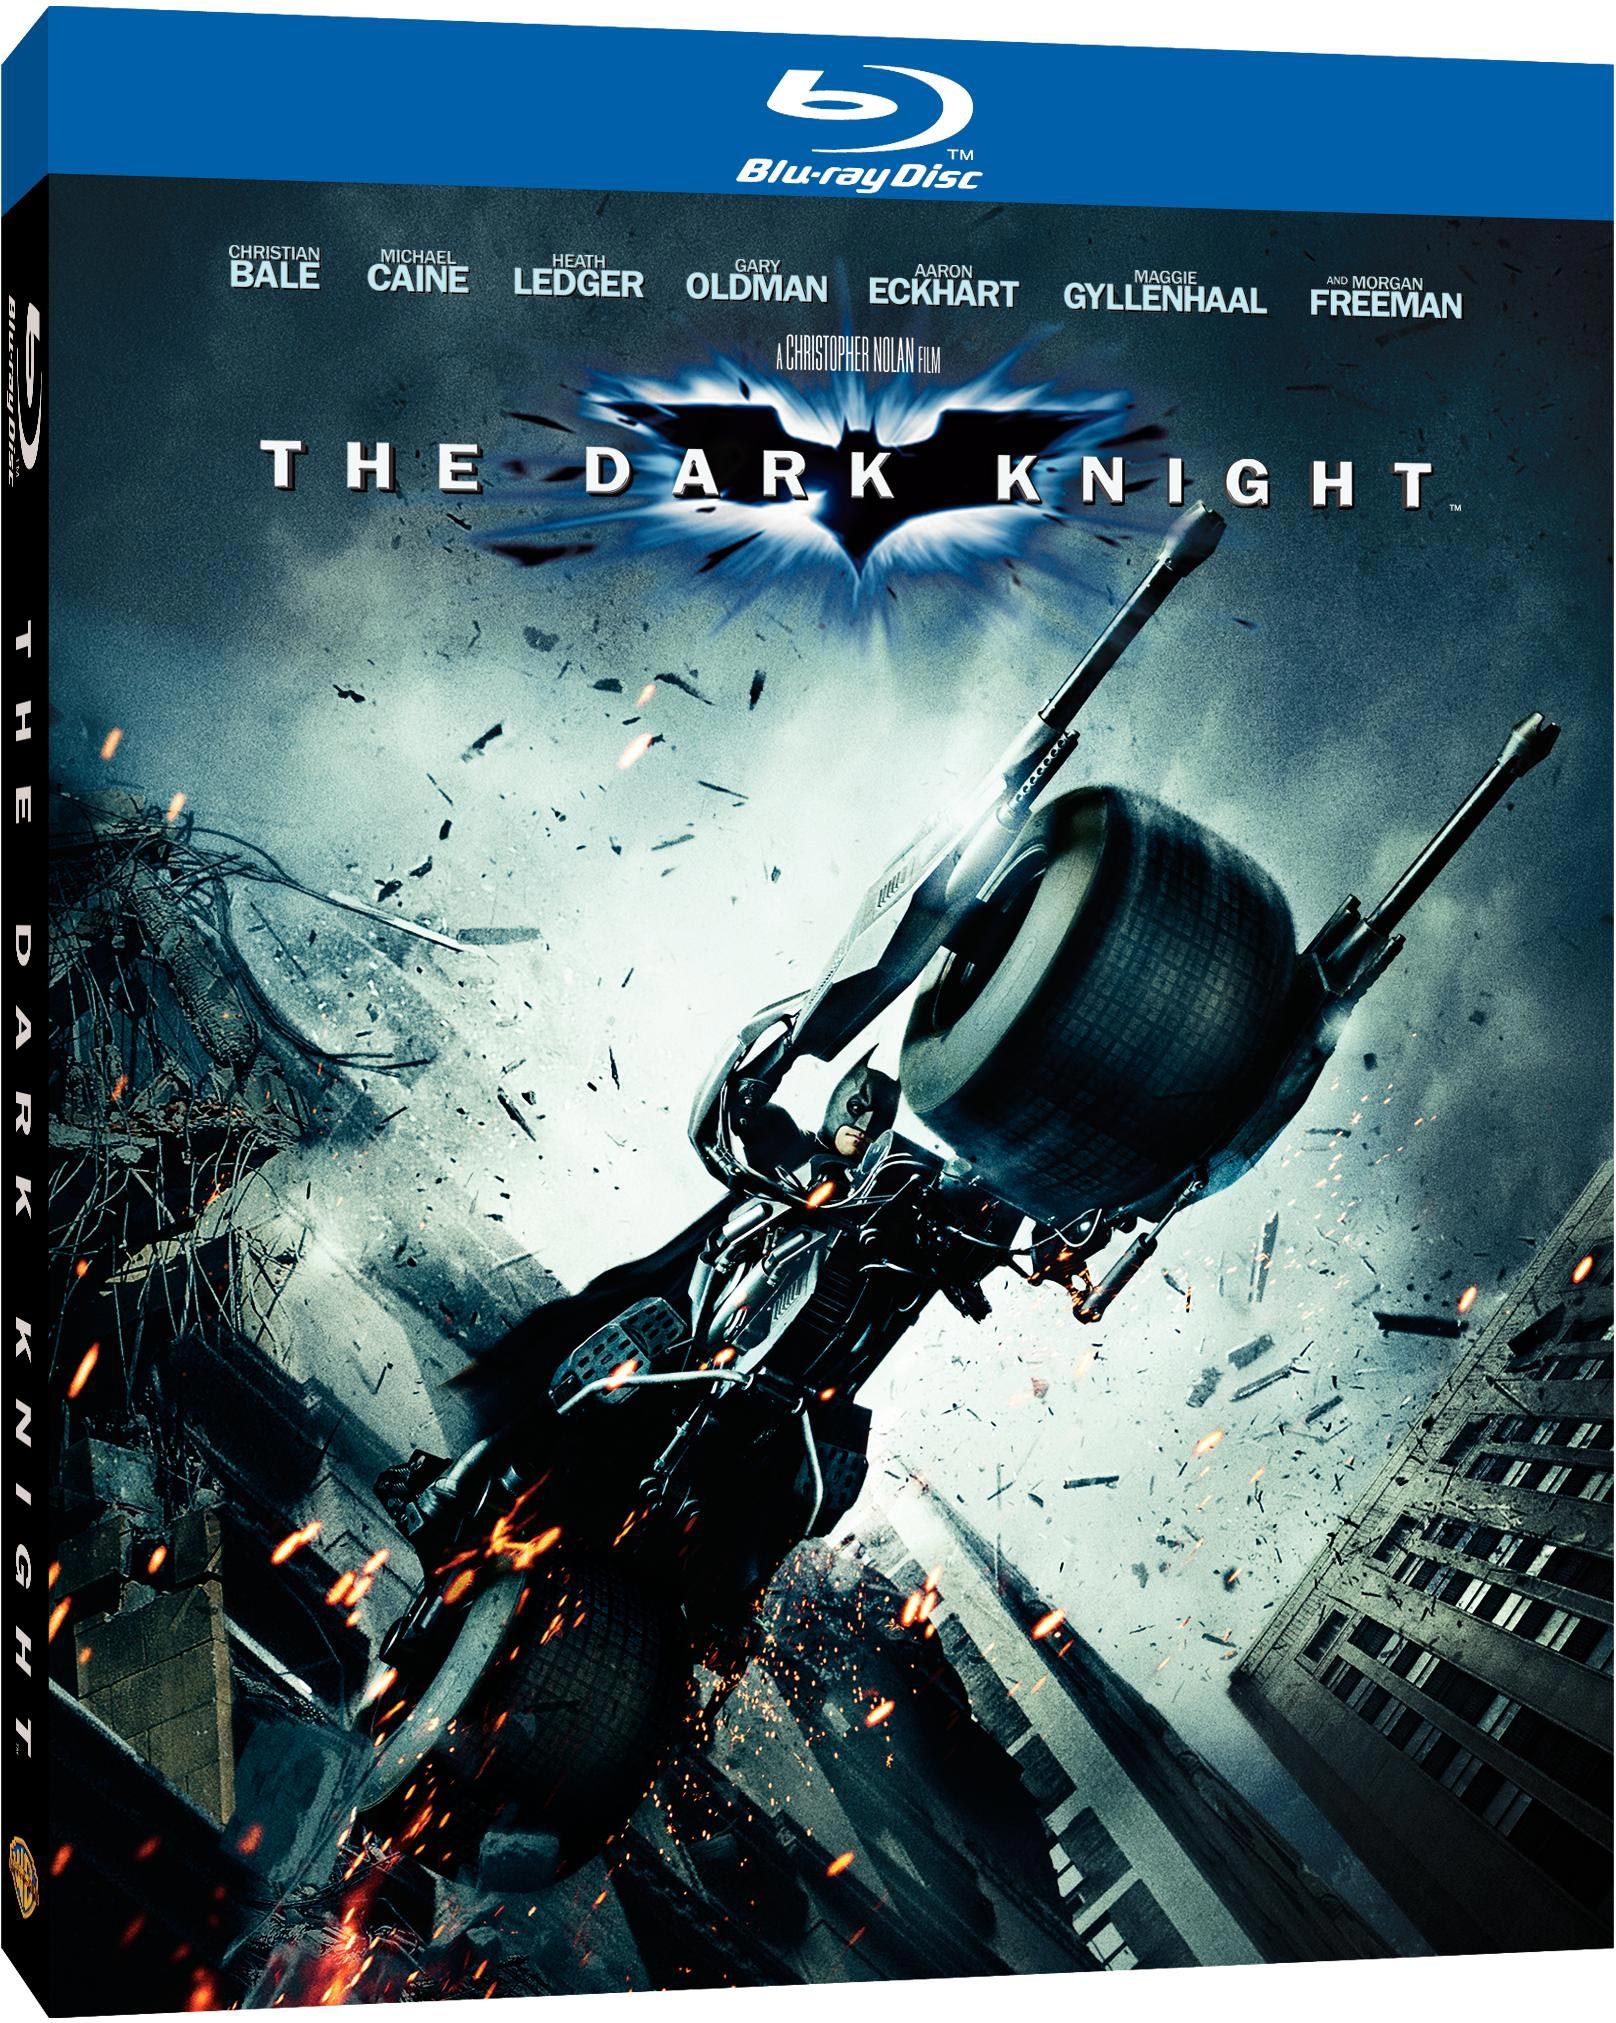 The Dark Knight On Blu-ray